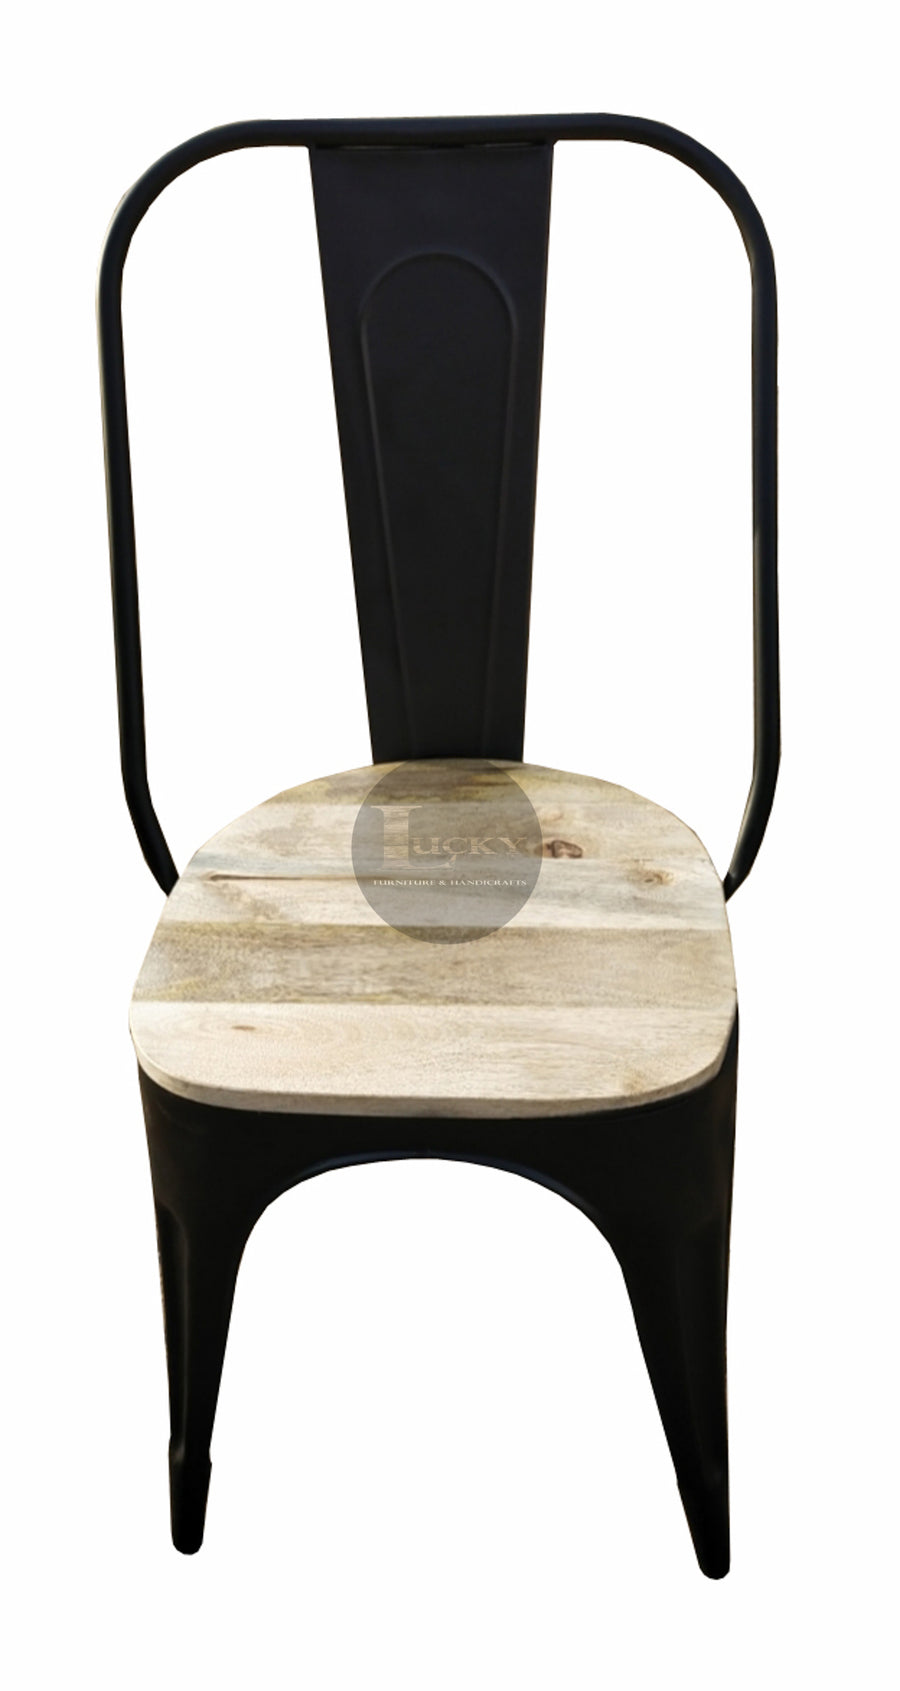 Mango Wood Metal Chair.